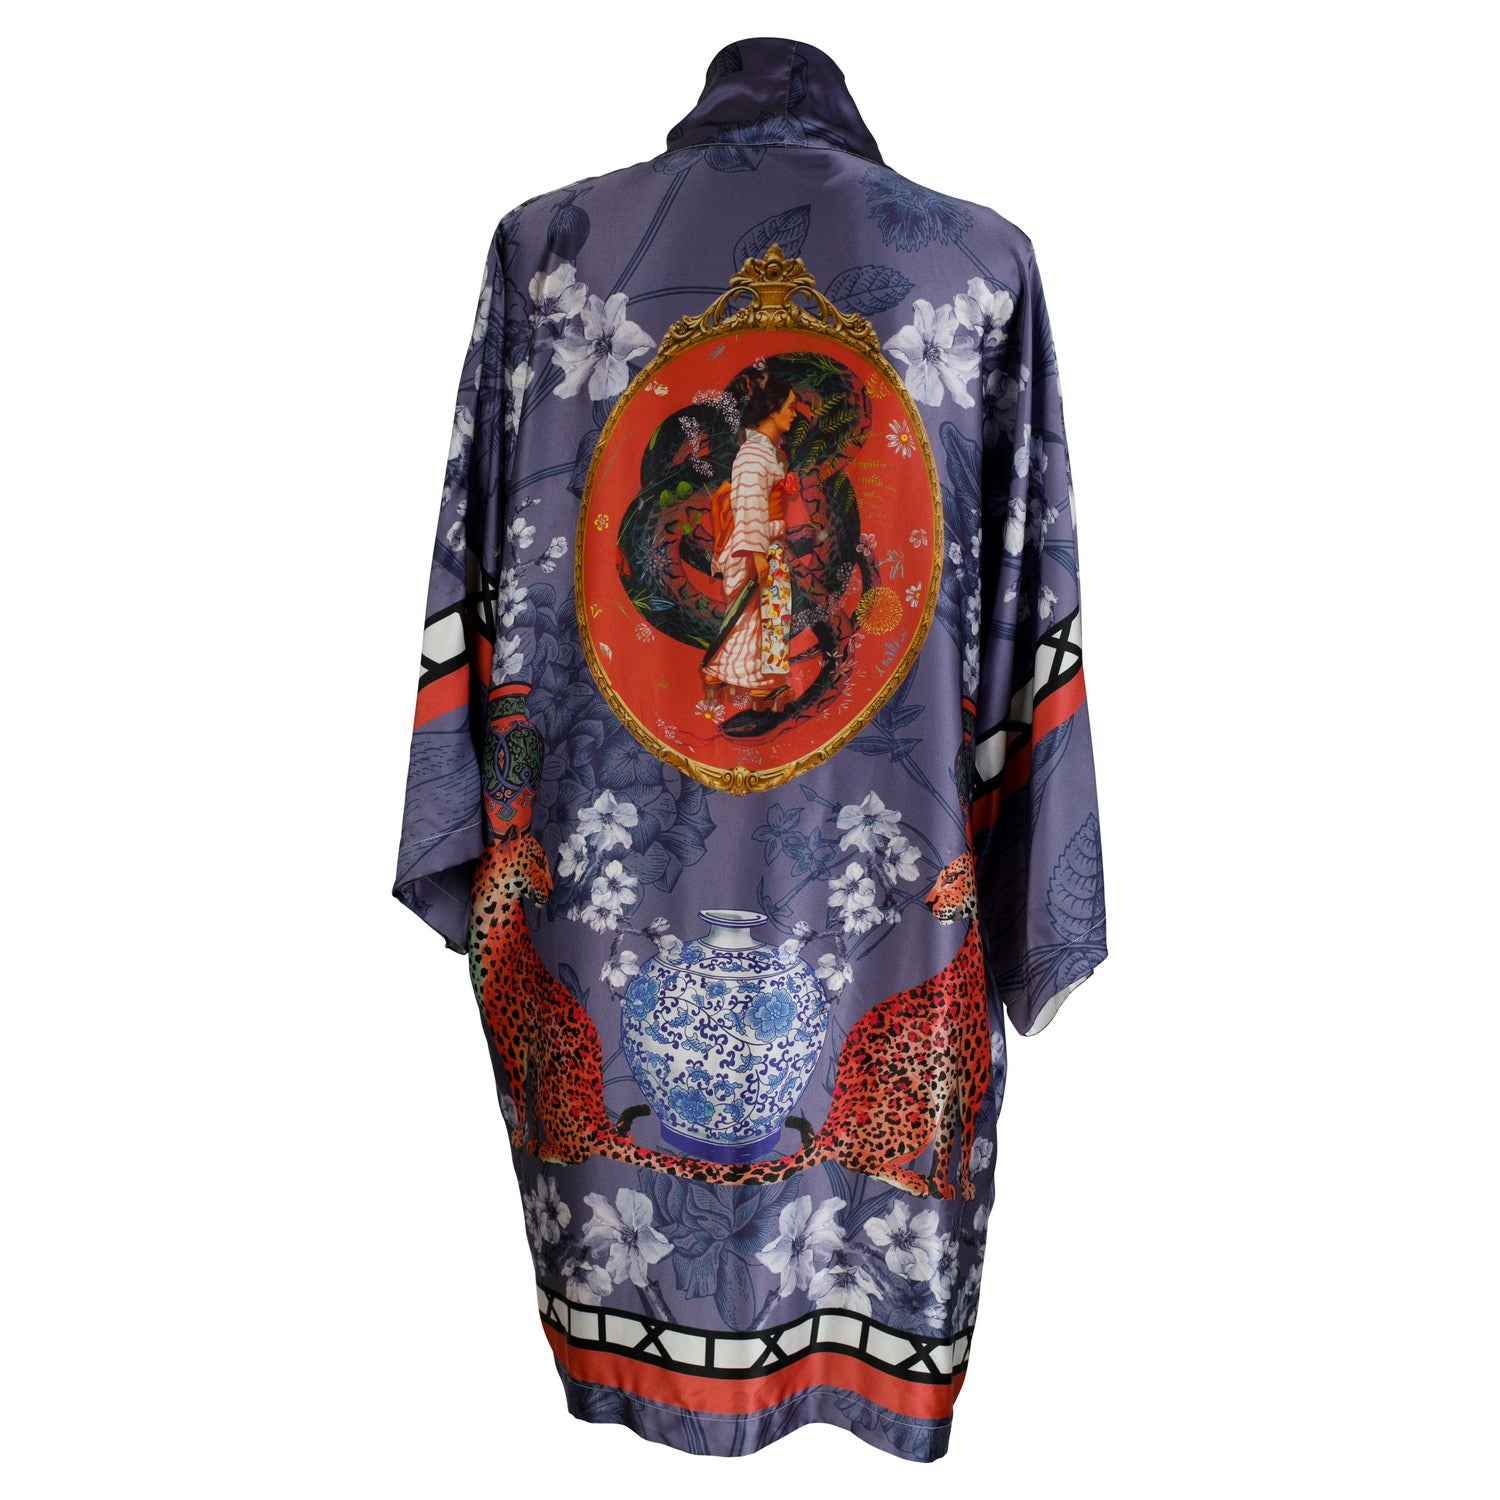 Back view of luxury 100% silk Kimono in a blue maximalist oriental inspired design 